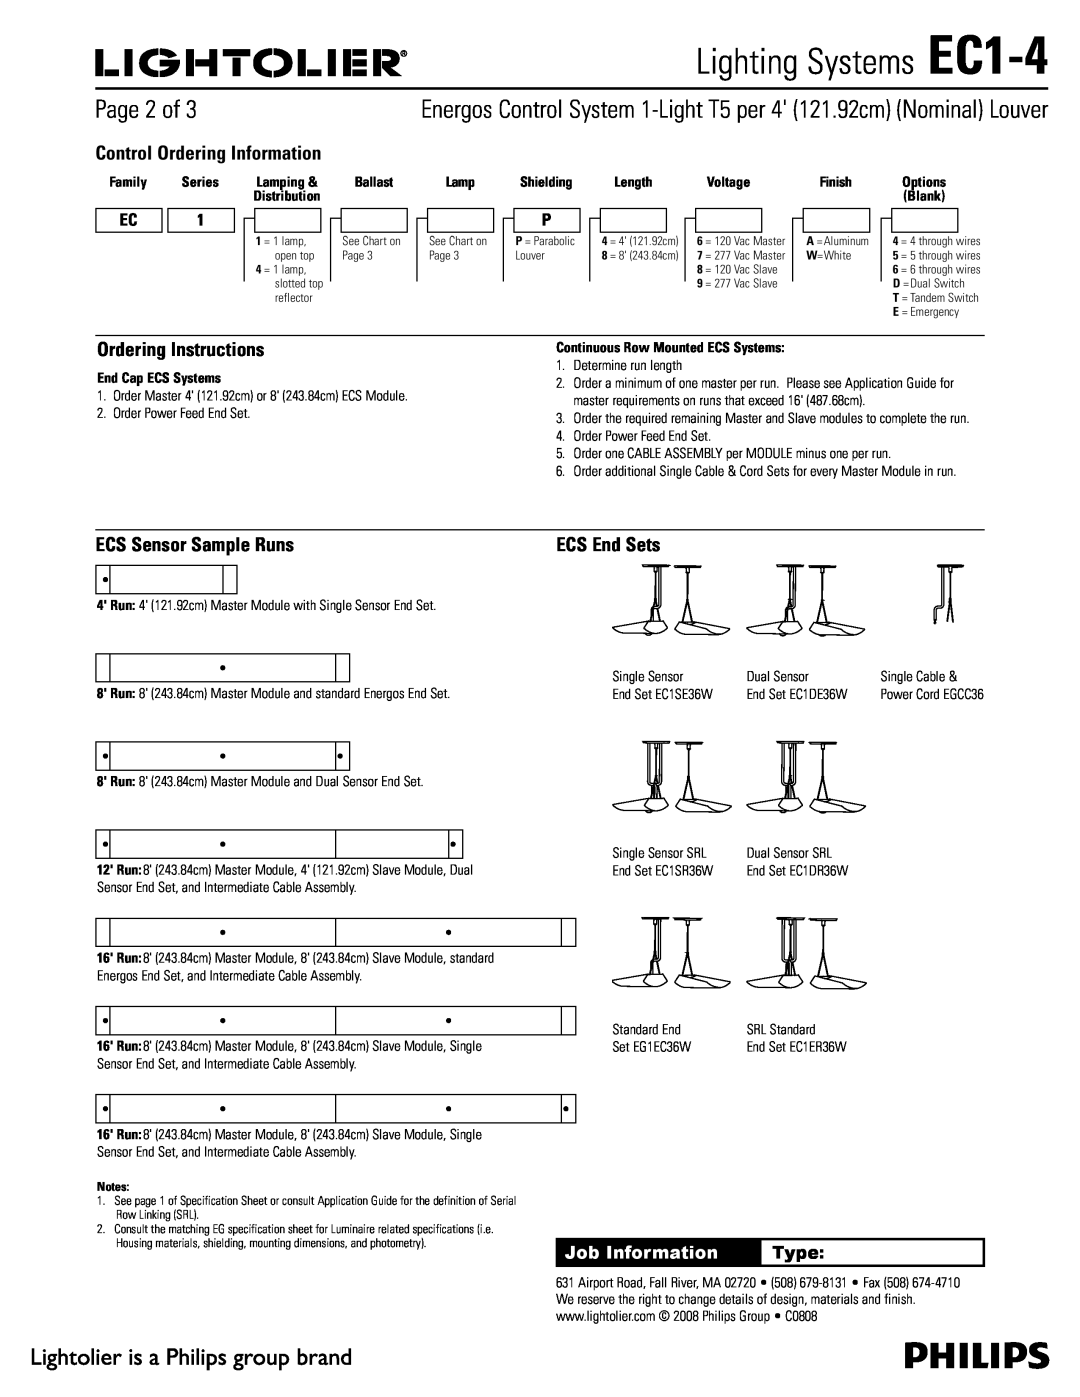 Lightolier EC1-4 Page 2 of, Control Ordering Information, Ordering Instructions, ECS Sensor Sample Runs, Type 